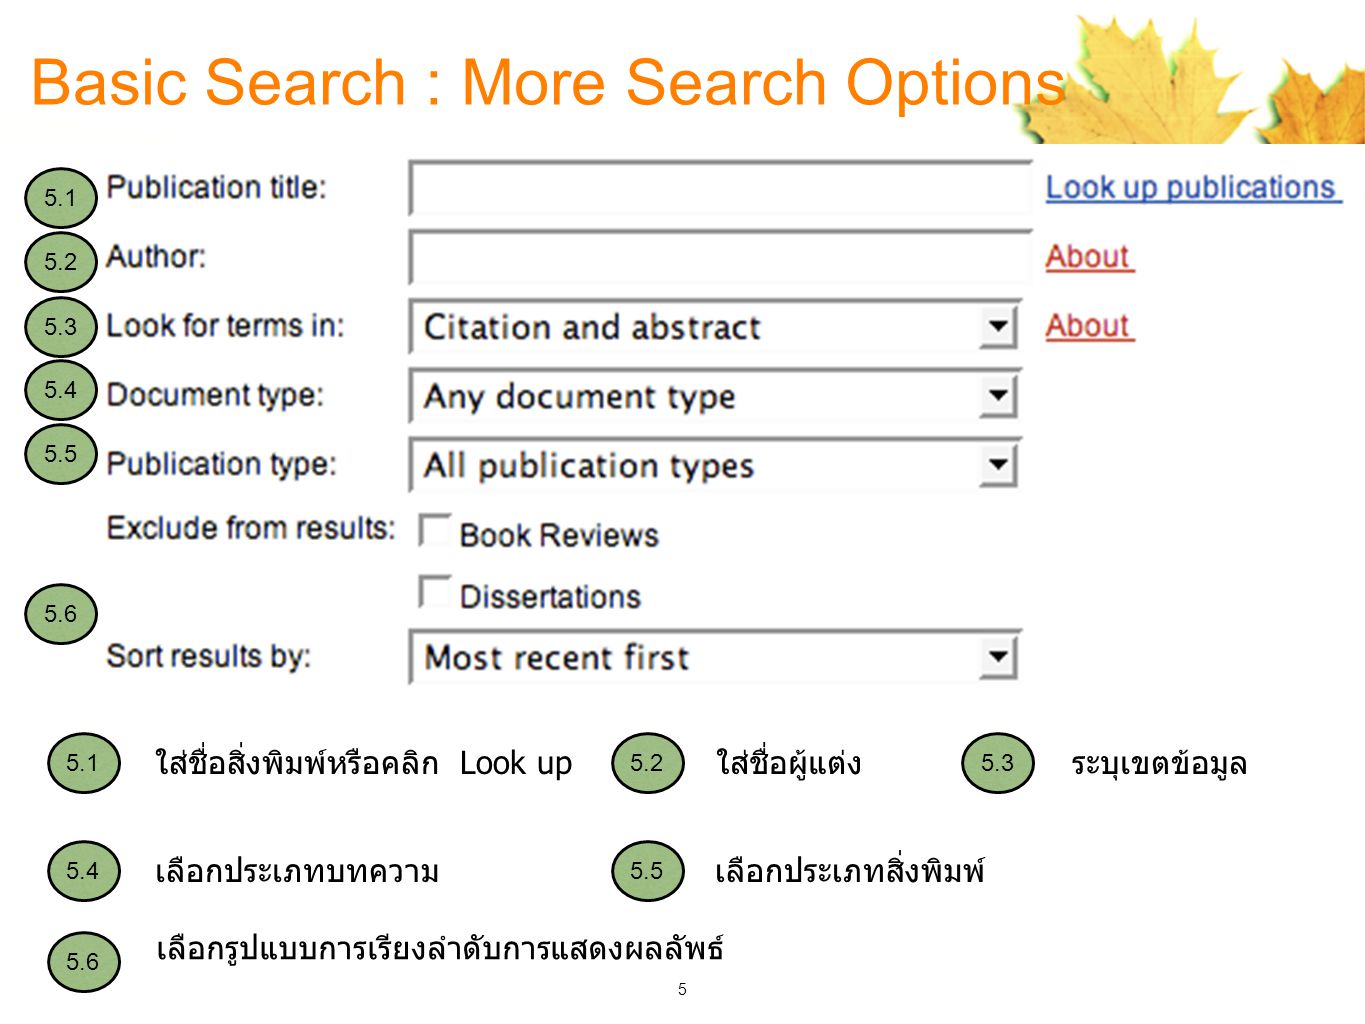 Basic Search : More Search Options เลือกประเภทสิ่งพิมพ์เลือกประเภทบทความ ระบุเขตข้อมูลใส่ชื่อผู้แต่งใส่ชื่อสิ่งพิมพ์หรือคลิก Look up 5.6 เลือกรูปแบบการเรียงลำดับการแสดงผลลัพธ์